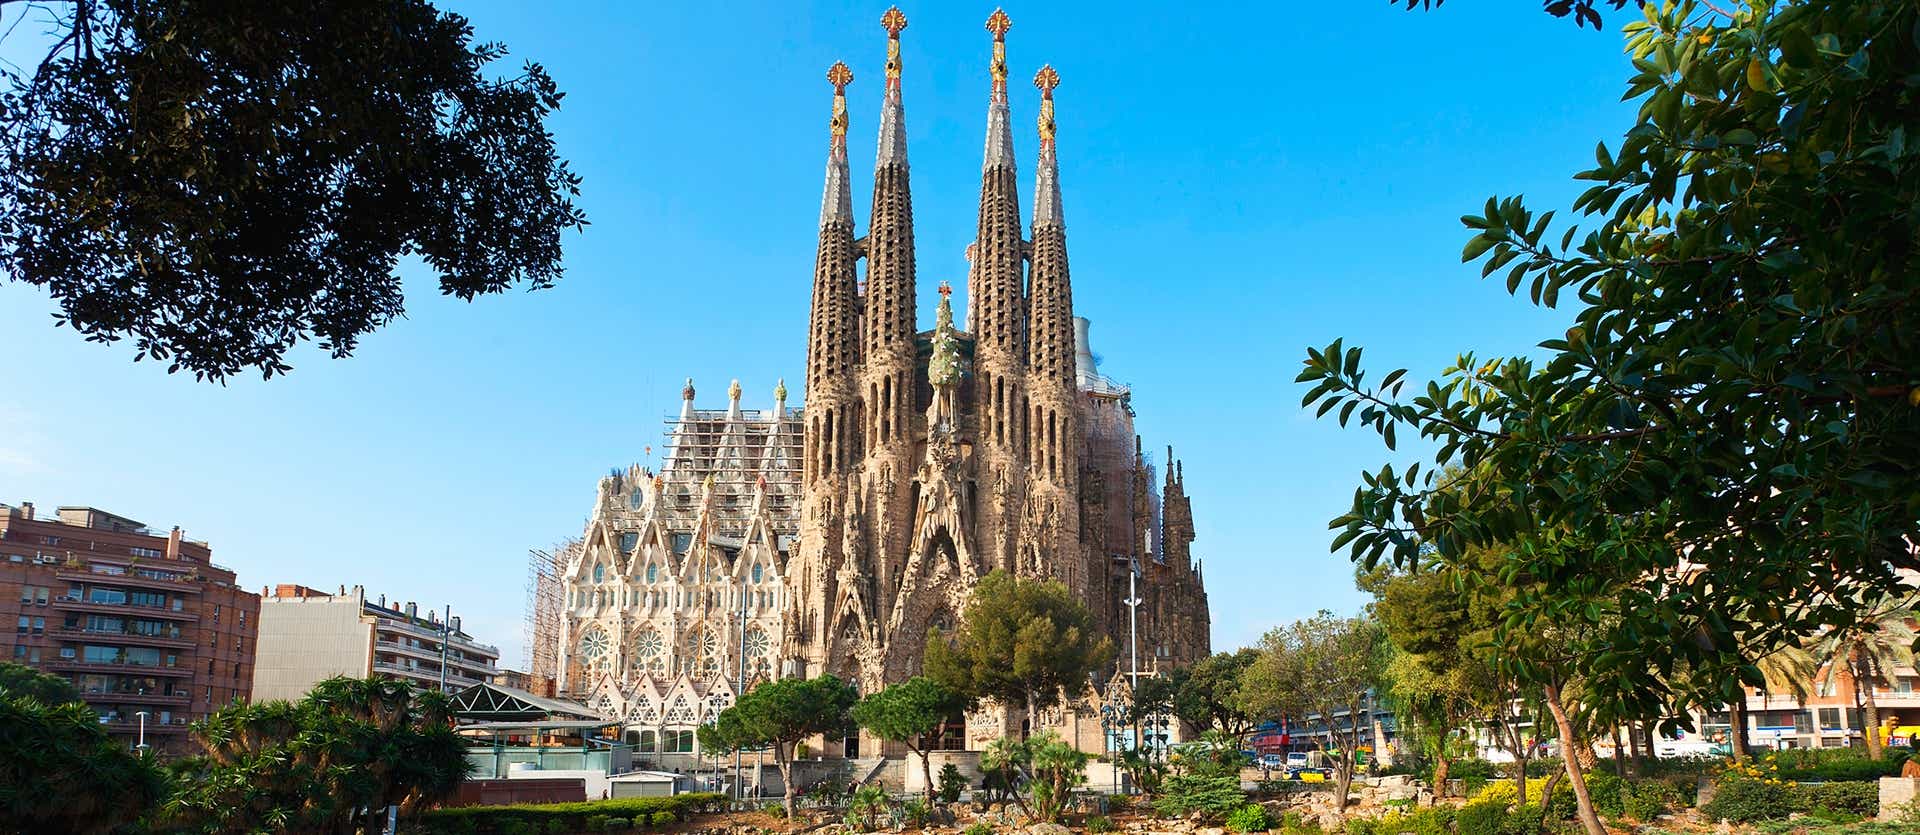 Sagrada Familia <span class="iconos separador"></span> Barcelona <span class="iconos separador"></span> España